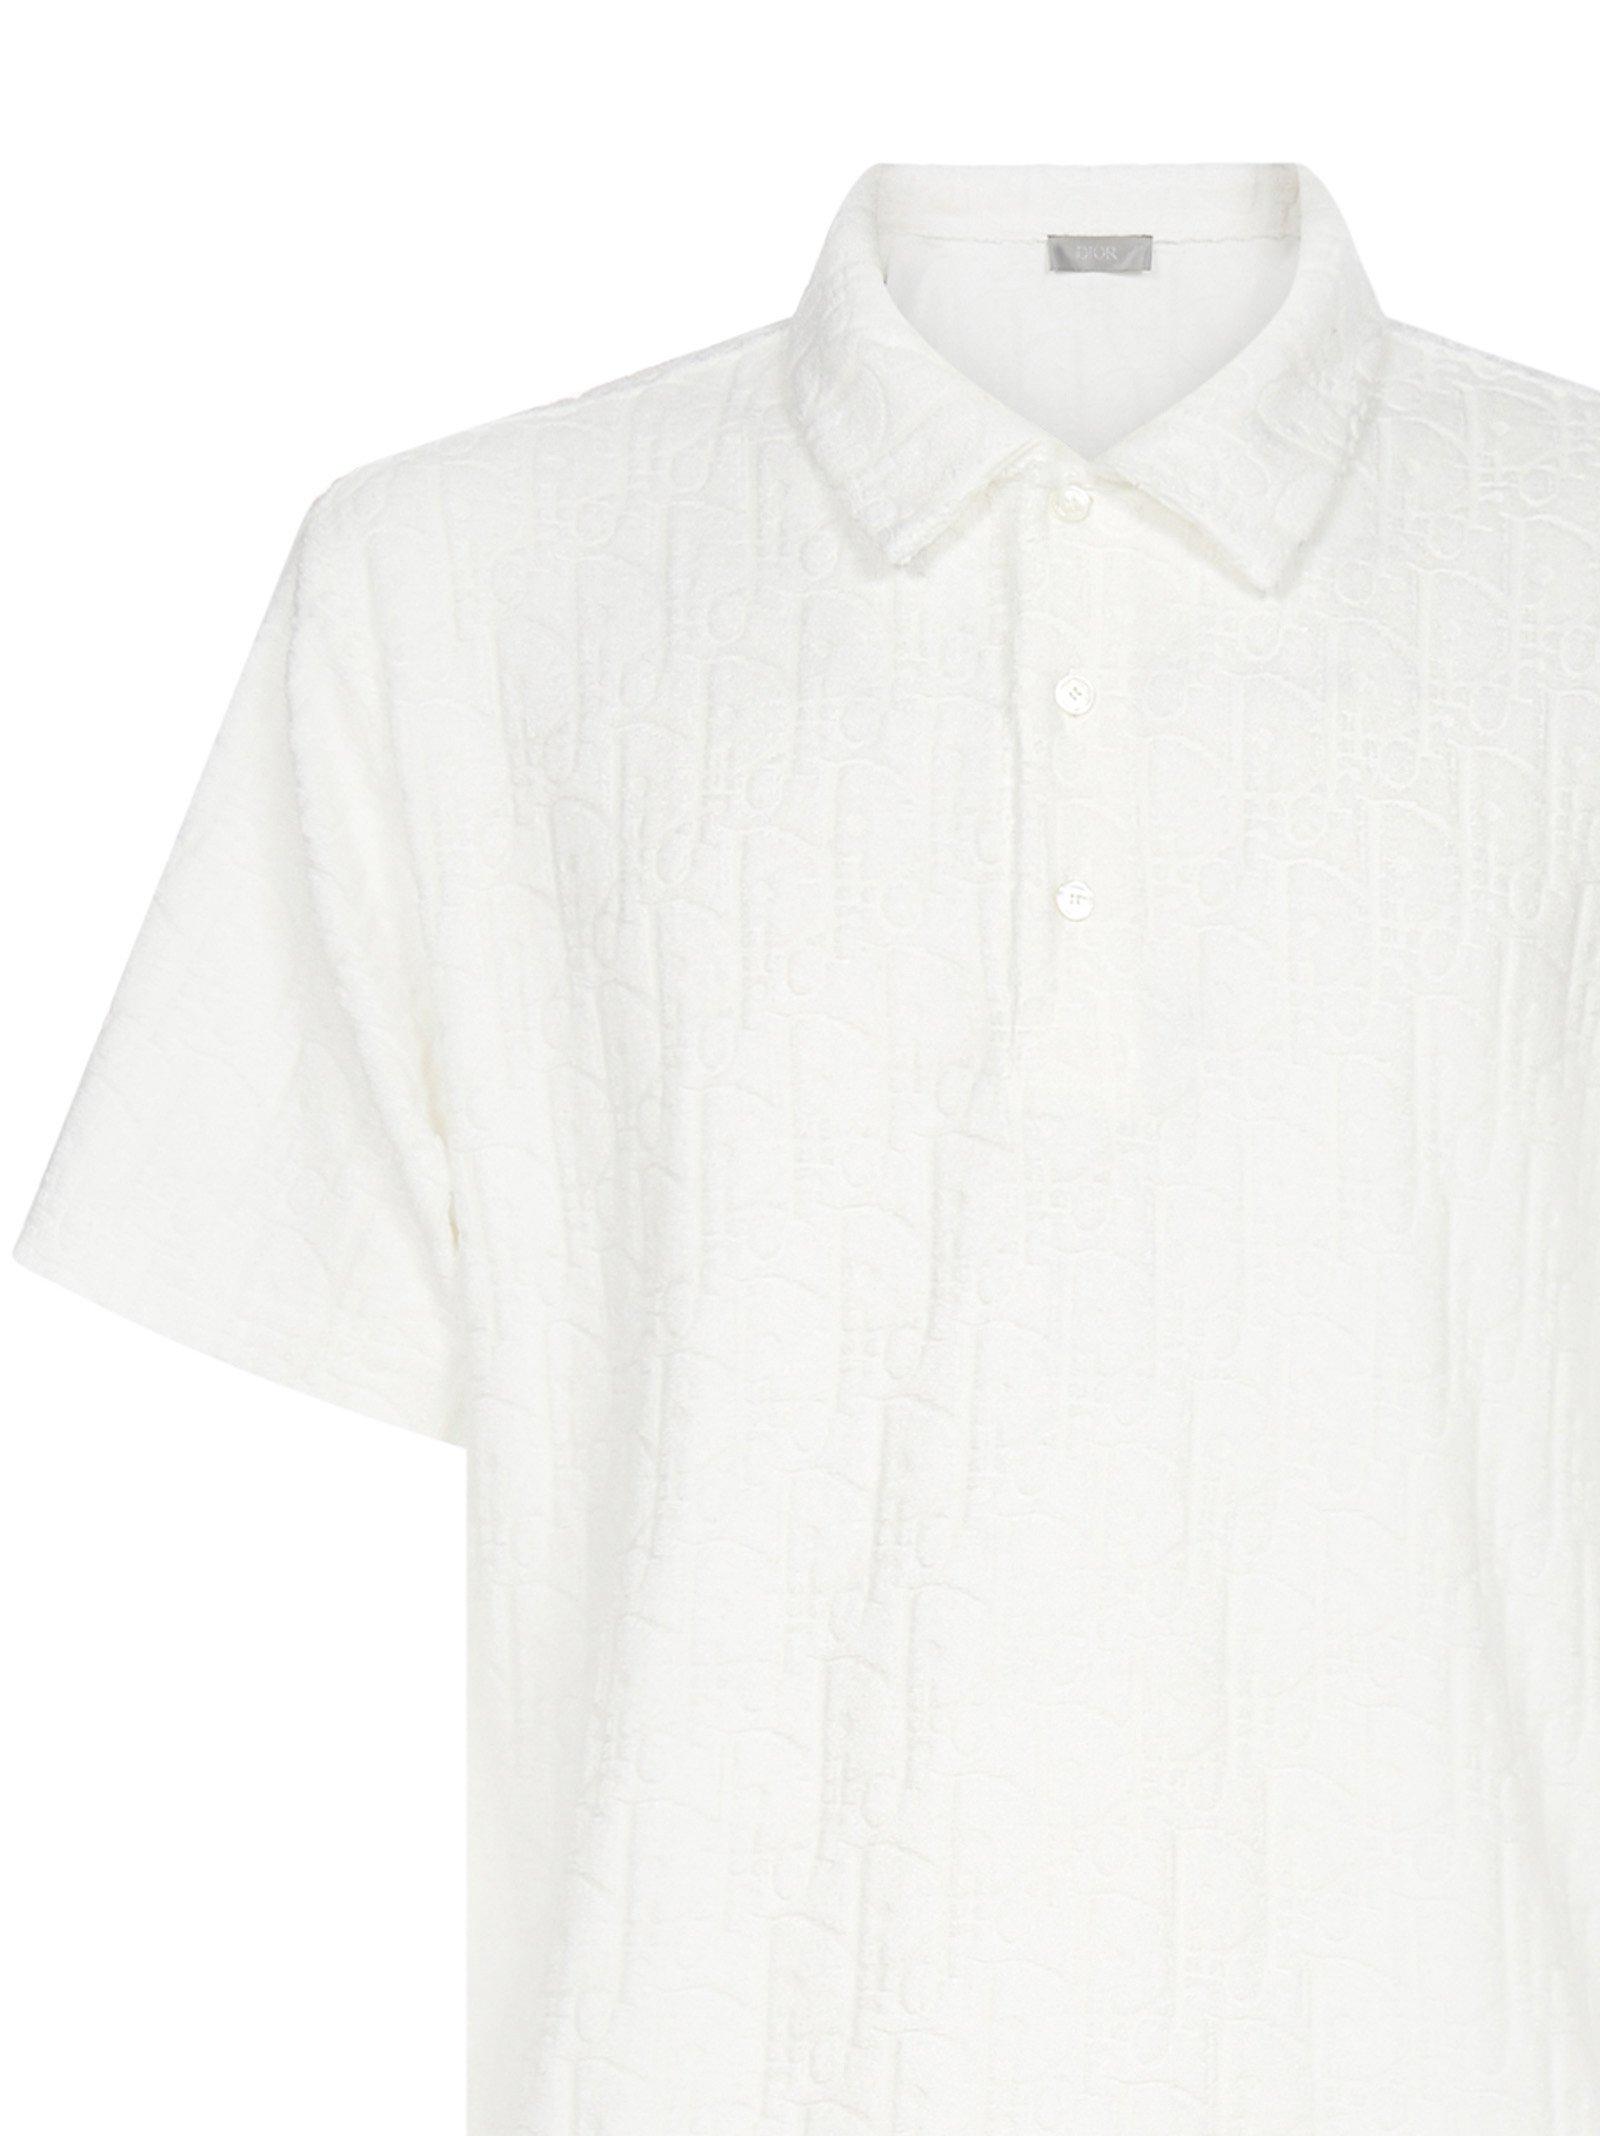 Dior Oversized Oblique T-Shirt White